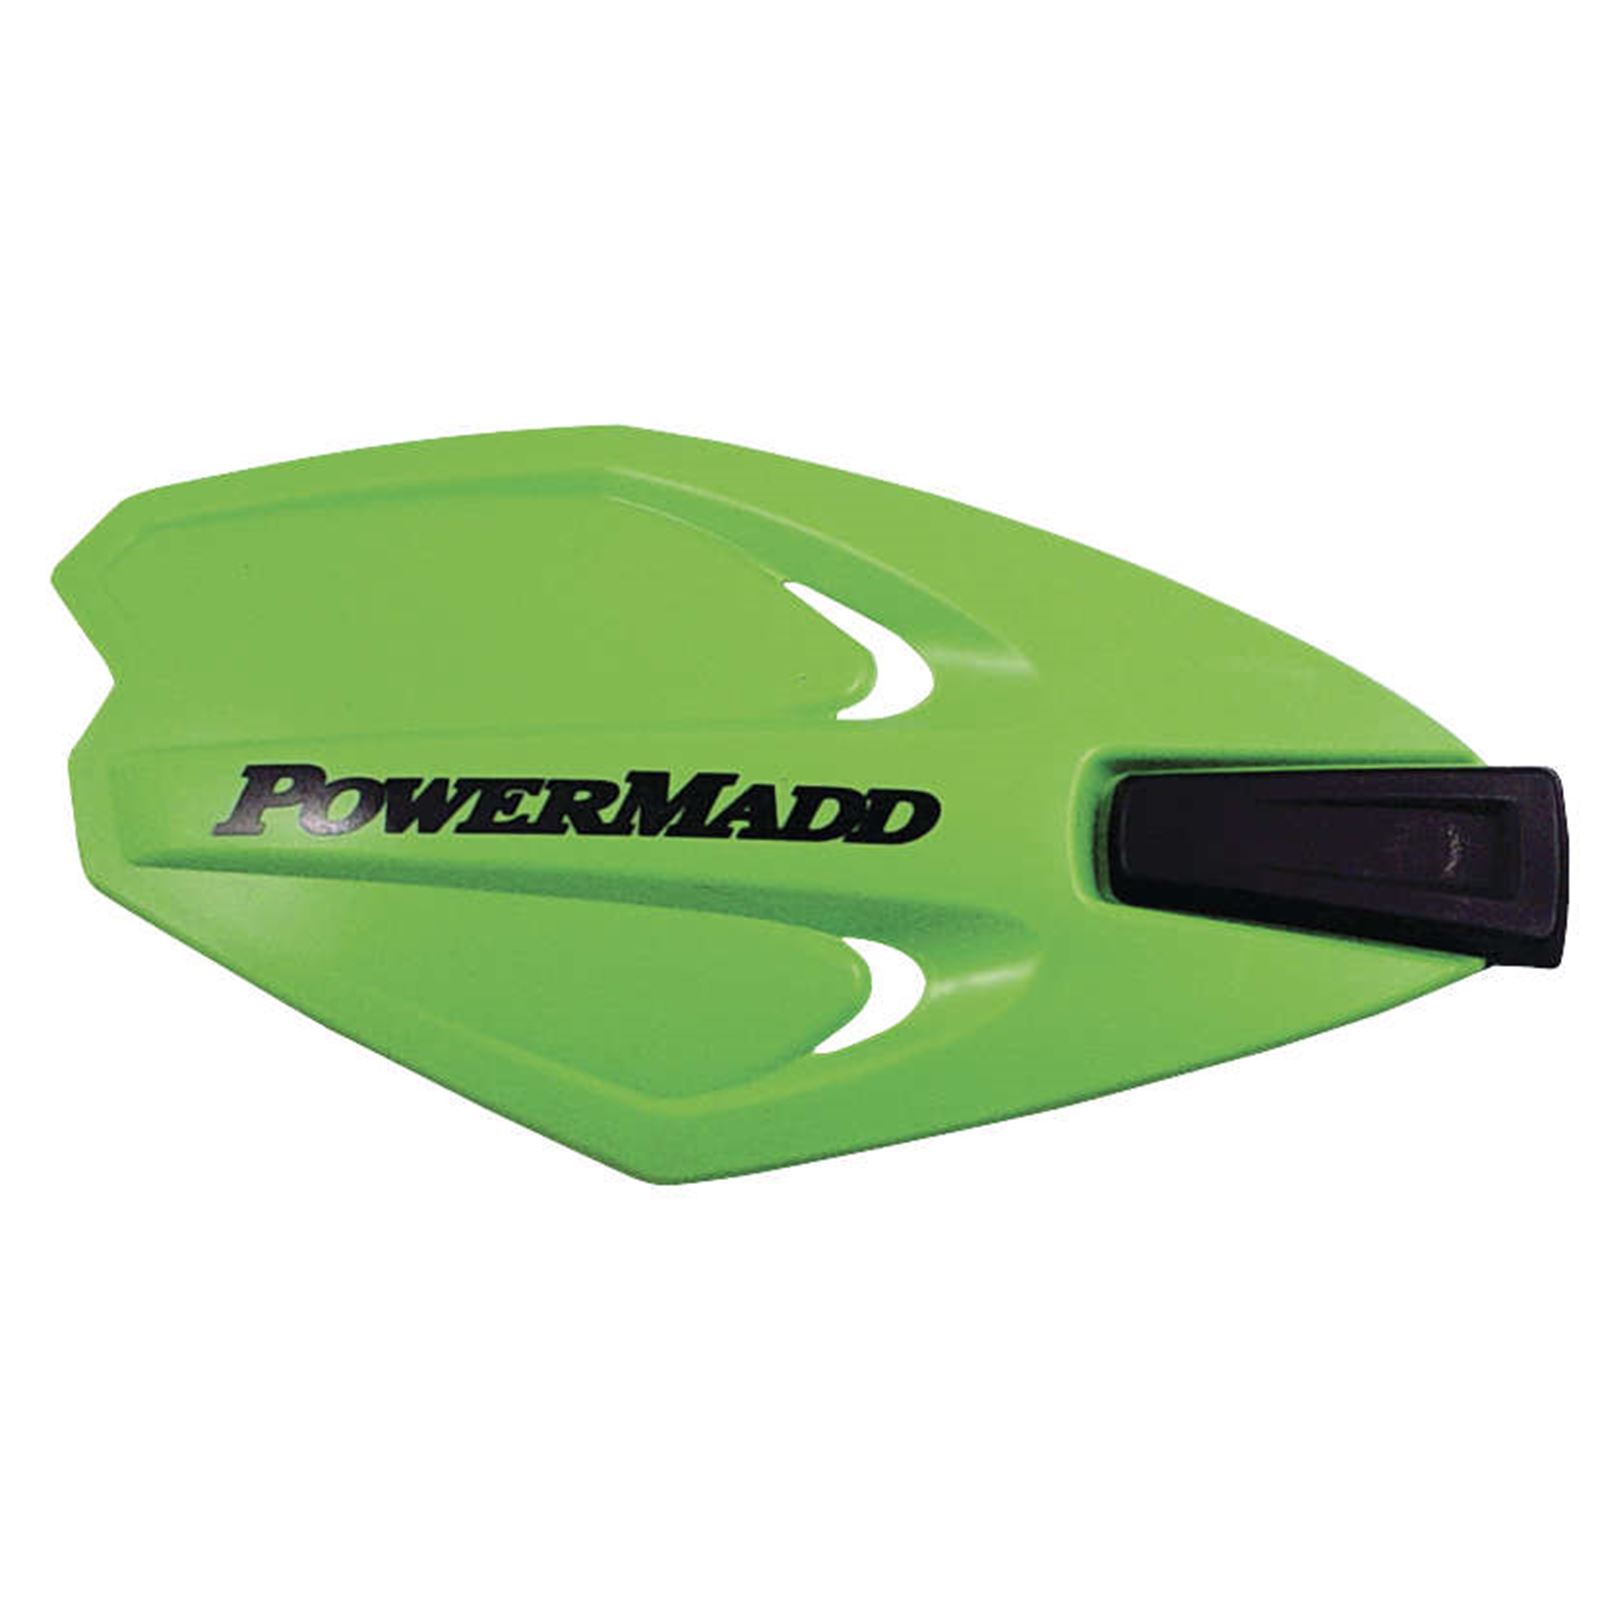 Powermadd Power X Series Handguard - Green - No Mount